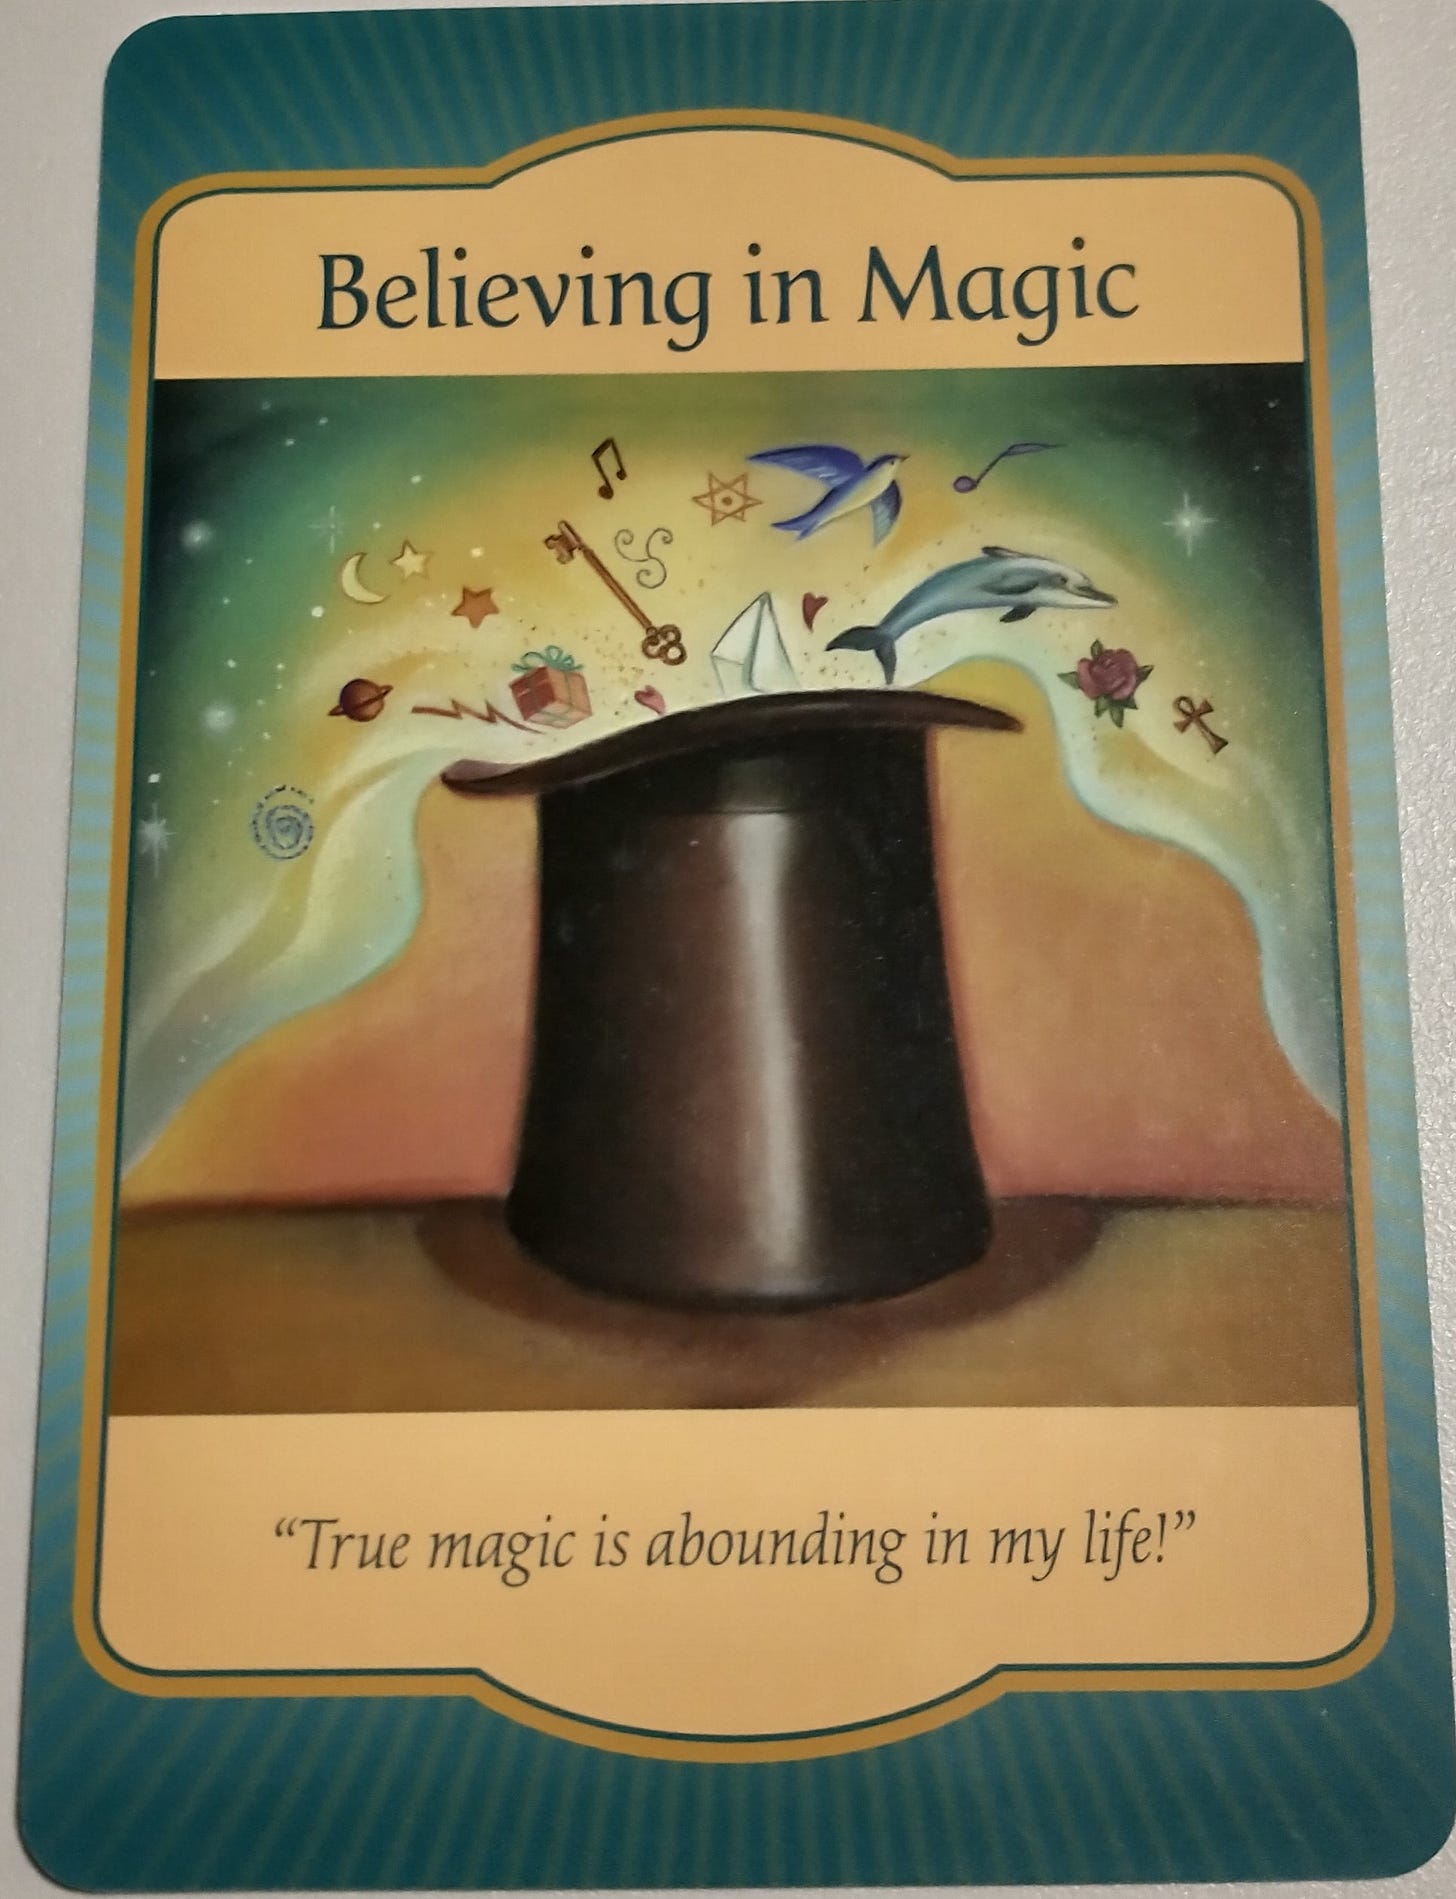 Believing in Magie: "True magic is abounding in my life!"